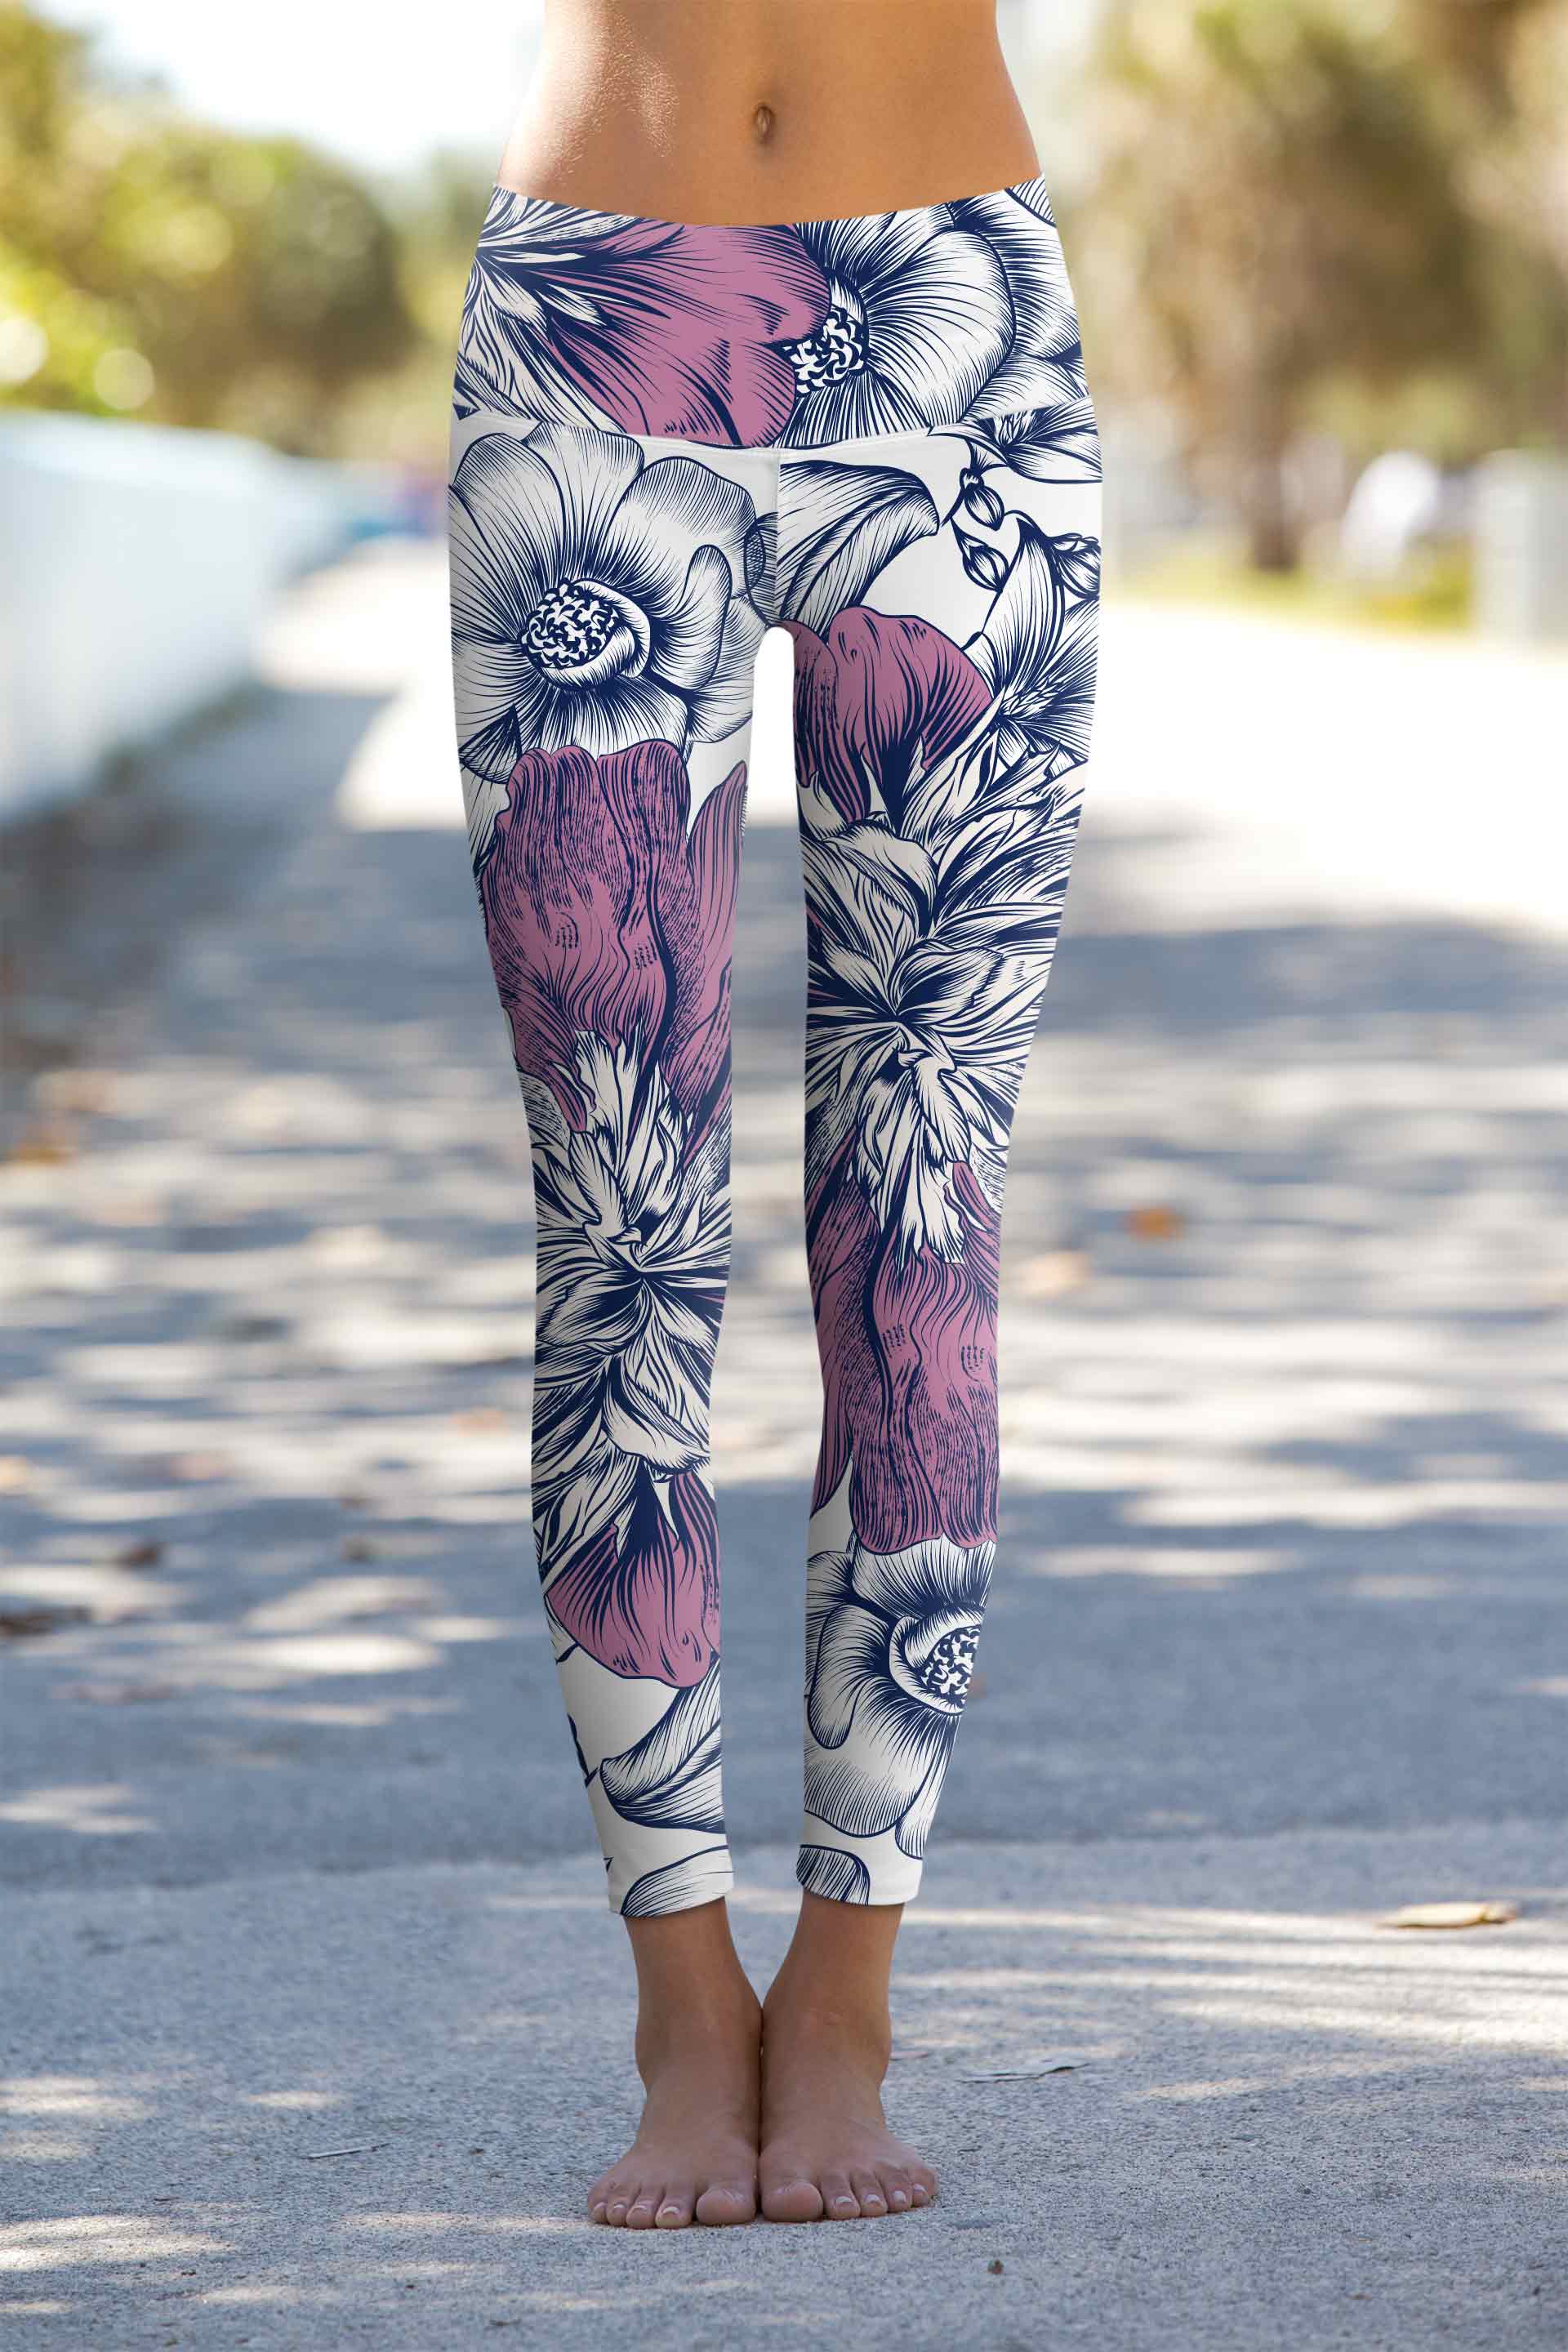 SEMI-ANNUAL SALE! Dream Catcher Lucy White Floral Print Leggings Yoga Pants - Women - Pineapple Clothing